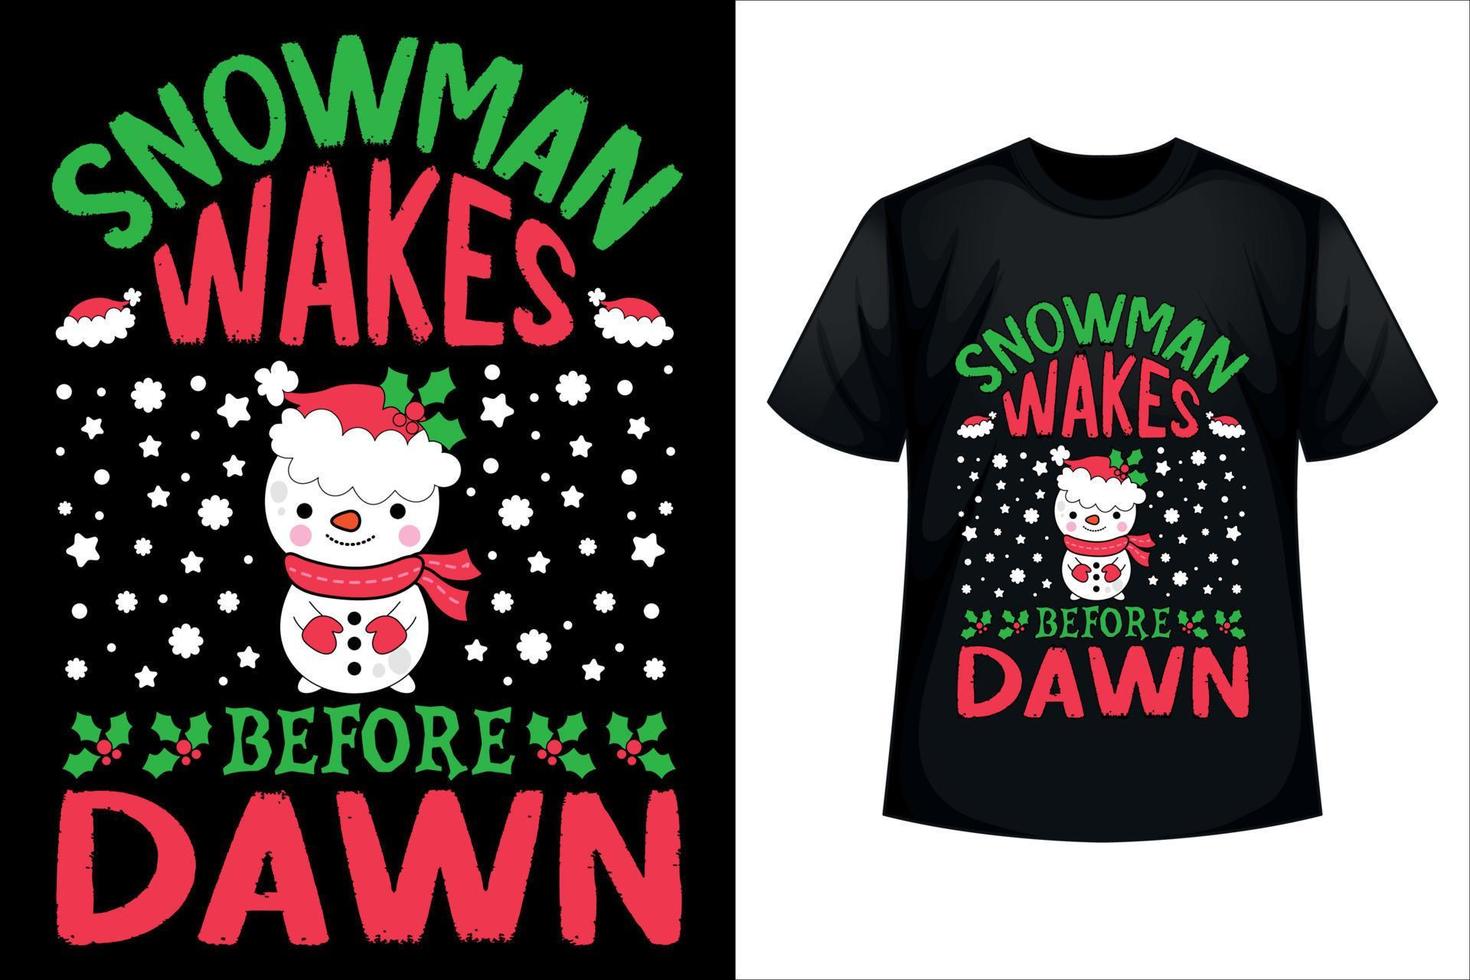 Snowman wakes before dawn - Christmas t-shirt design template vector